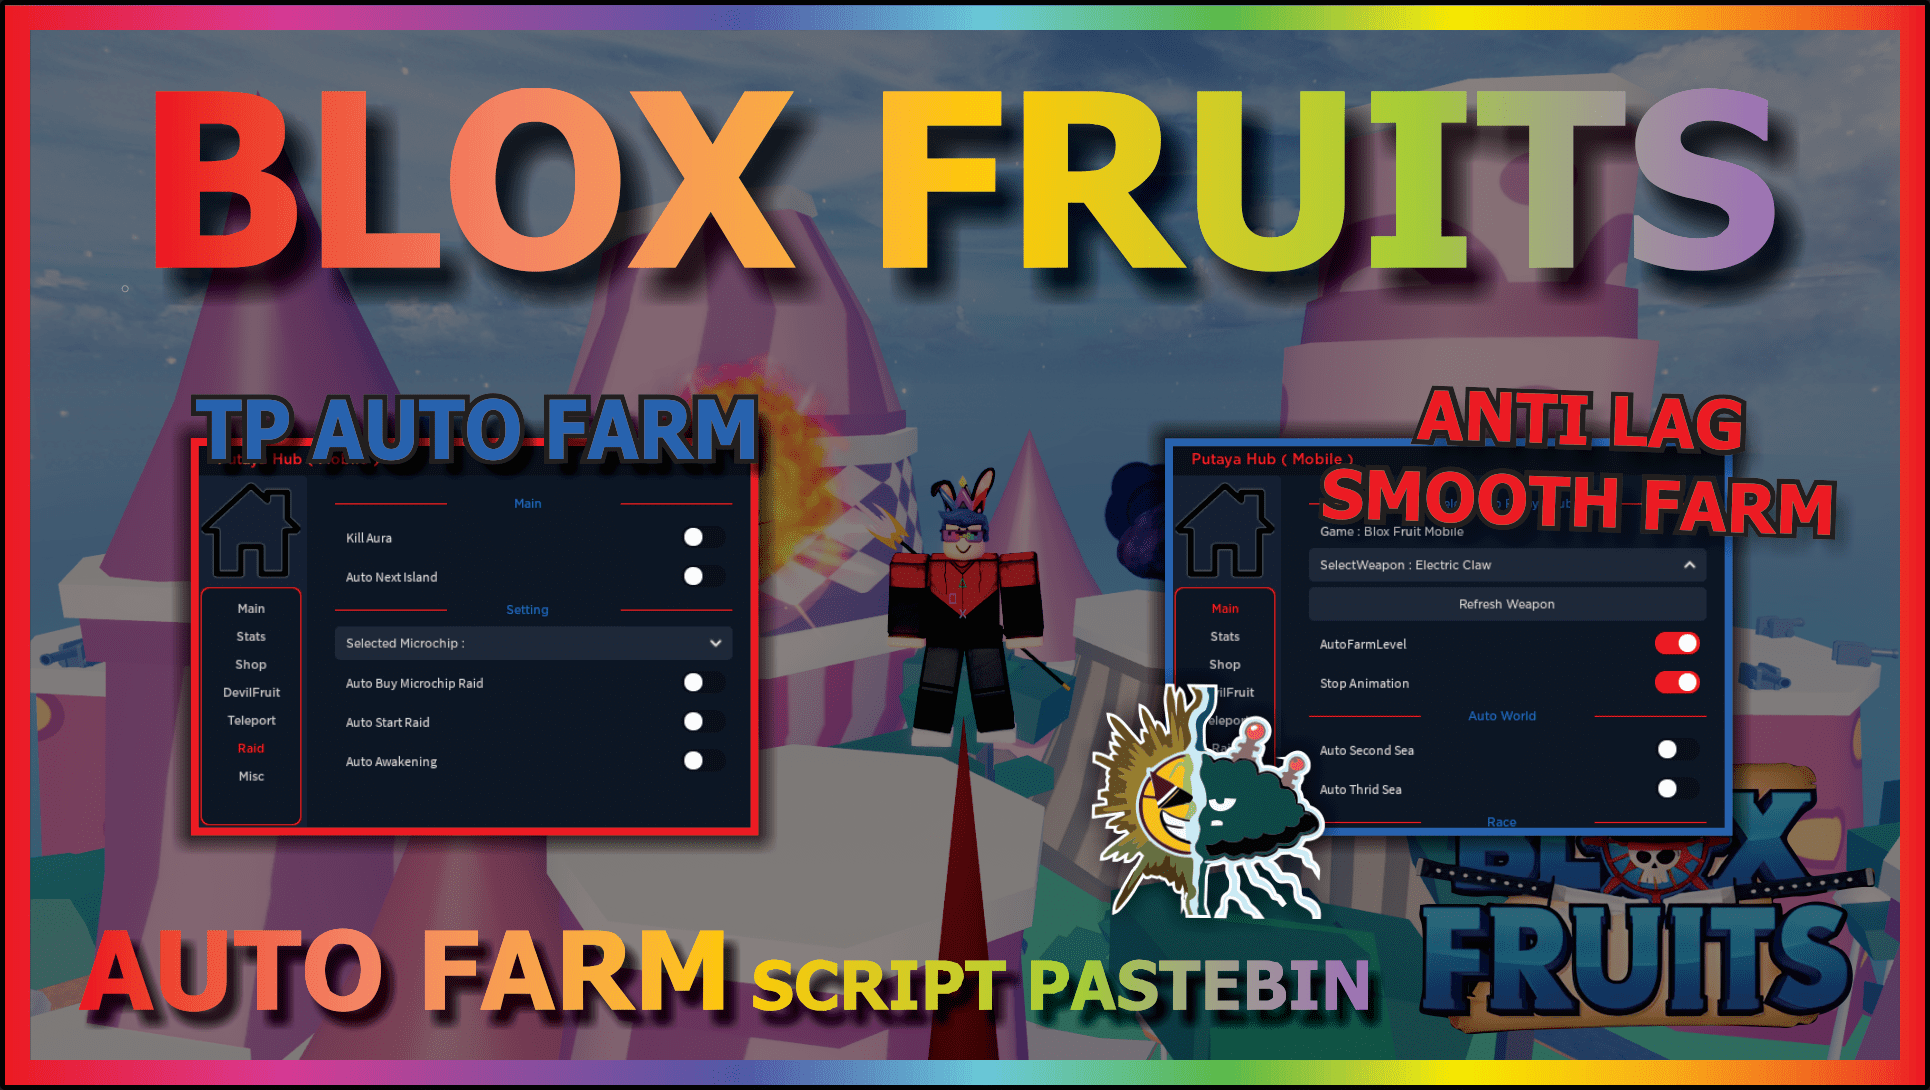 Blox Fruits script, enemy hit box extender